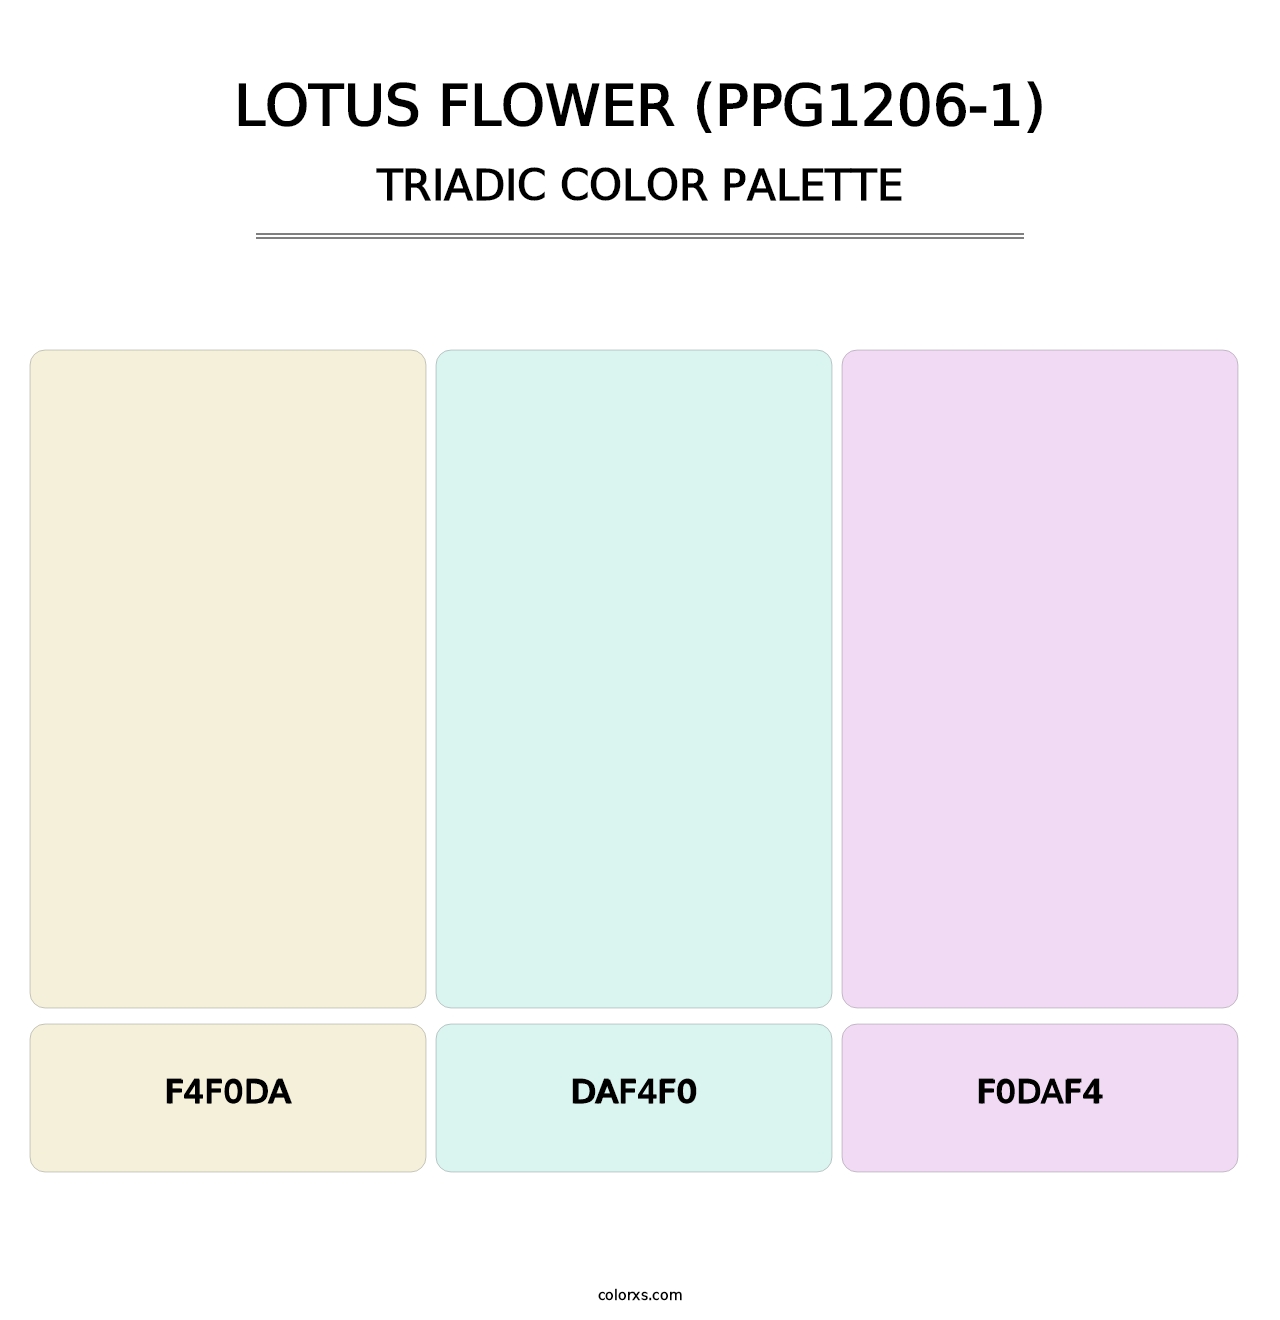 Lotus Flower (PPG1206-1) - Triadic Color Palette